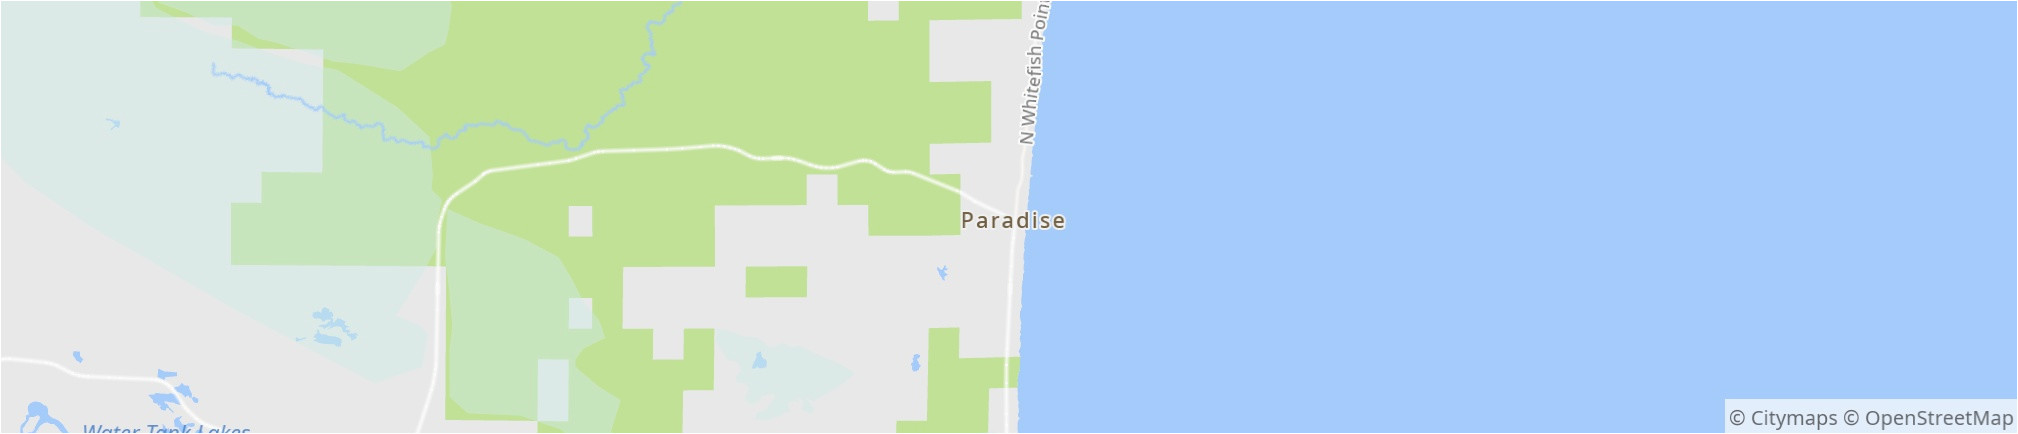 paradise 2019 best of paradise mi tourism tripadvisor